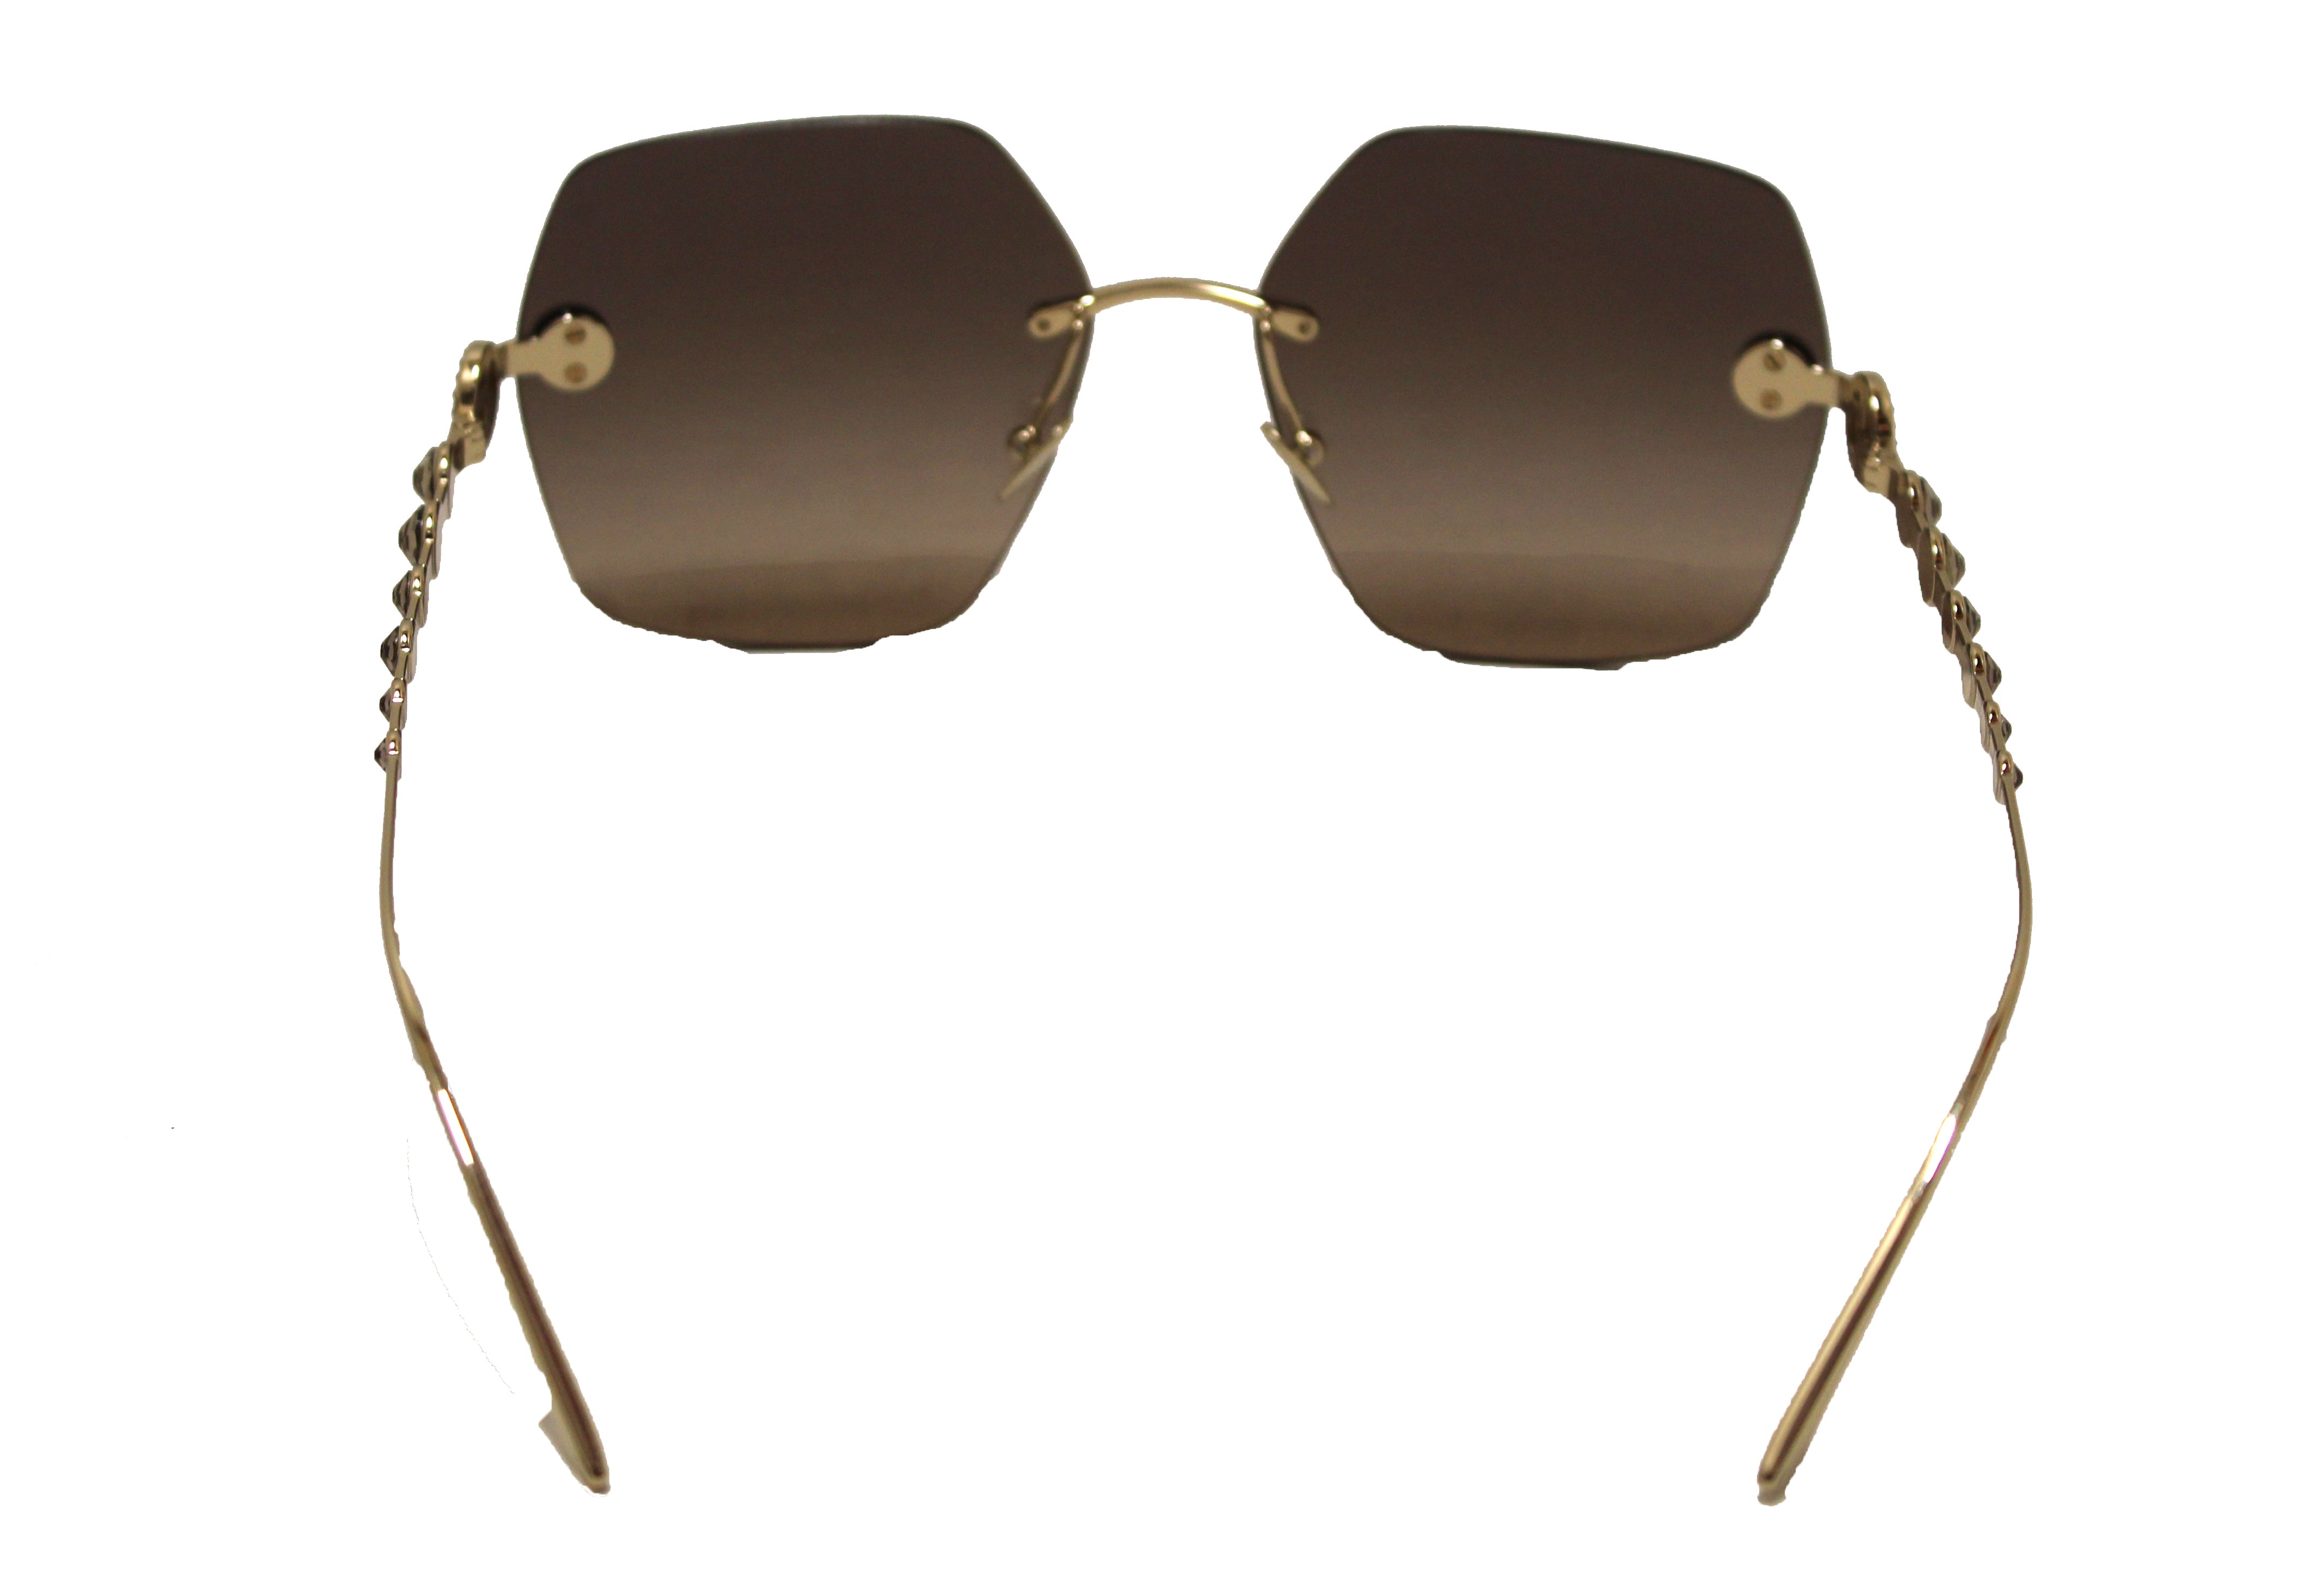 Authentic Giorgio Armani Gold with Crystal Frame Irregular Sunglasses